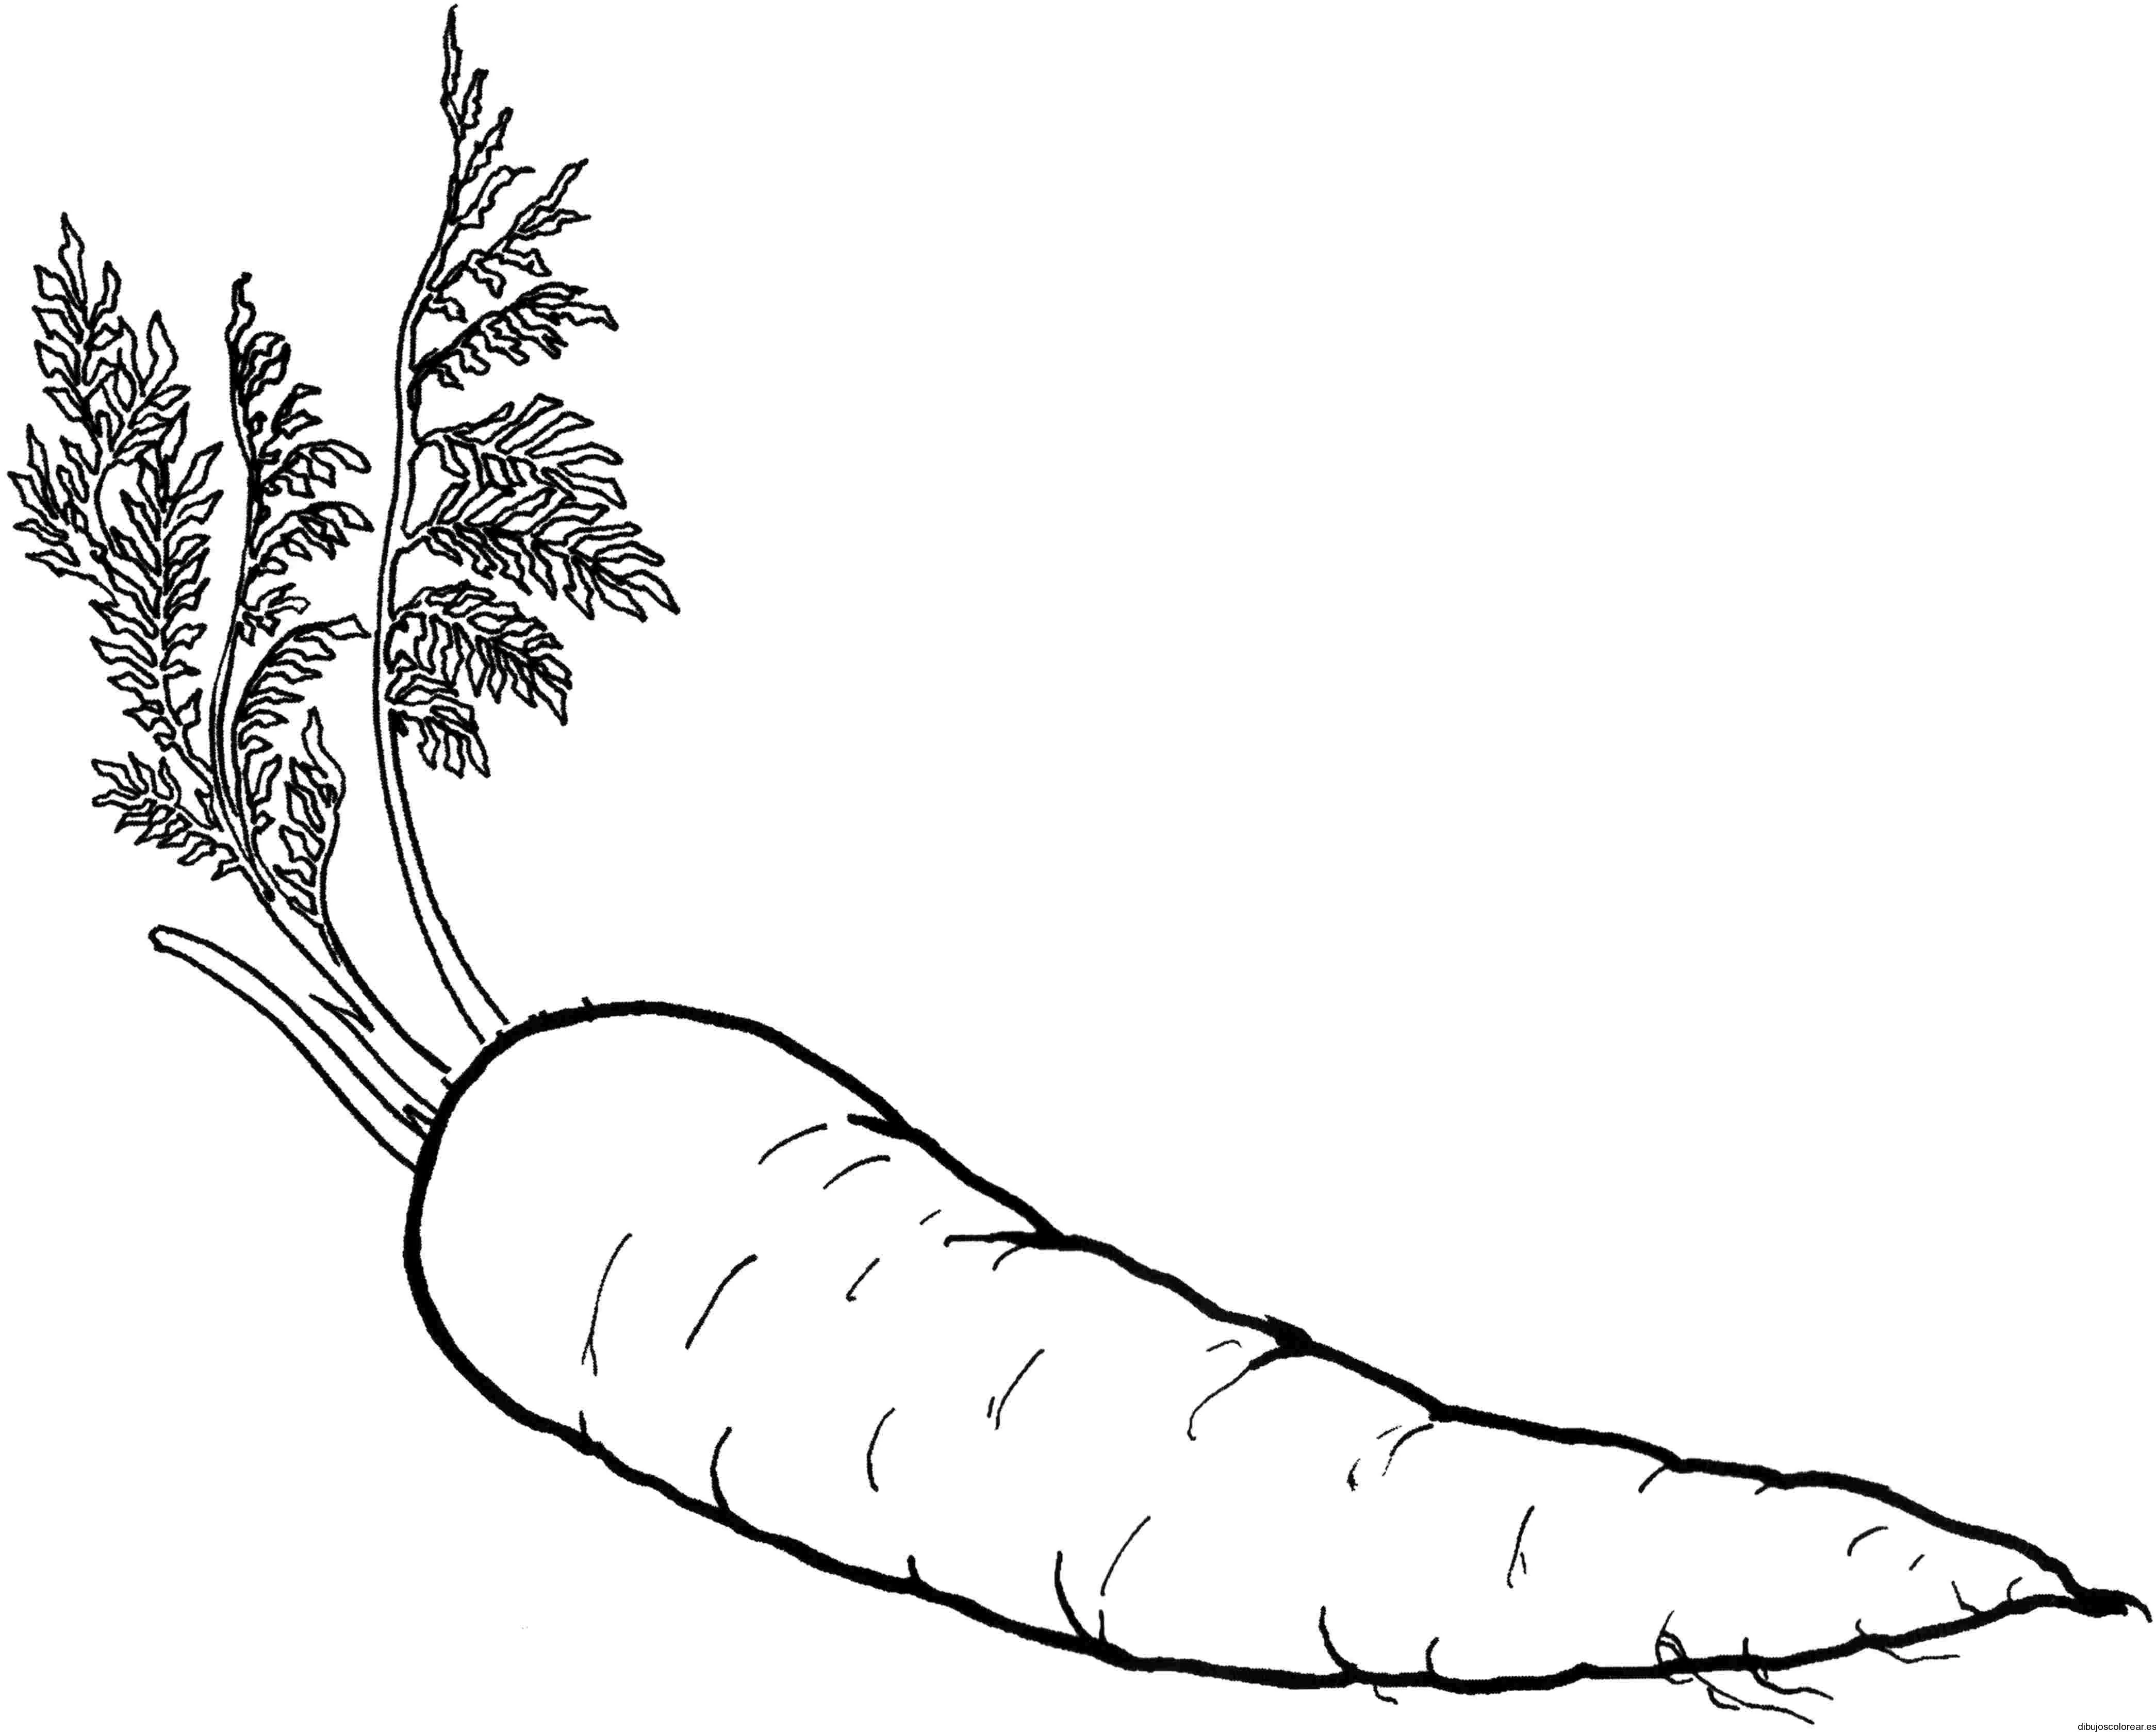 Dibujo de una zanahoria con su tallo | Dibujos para Colorear